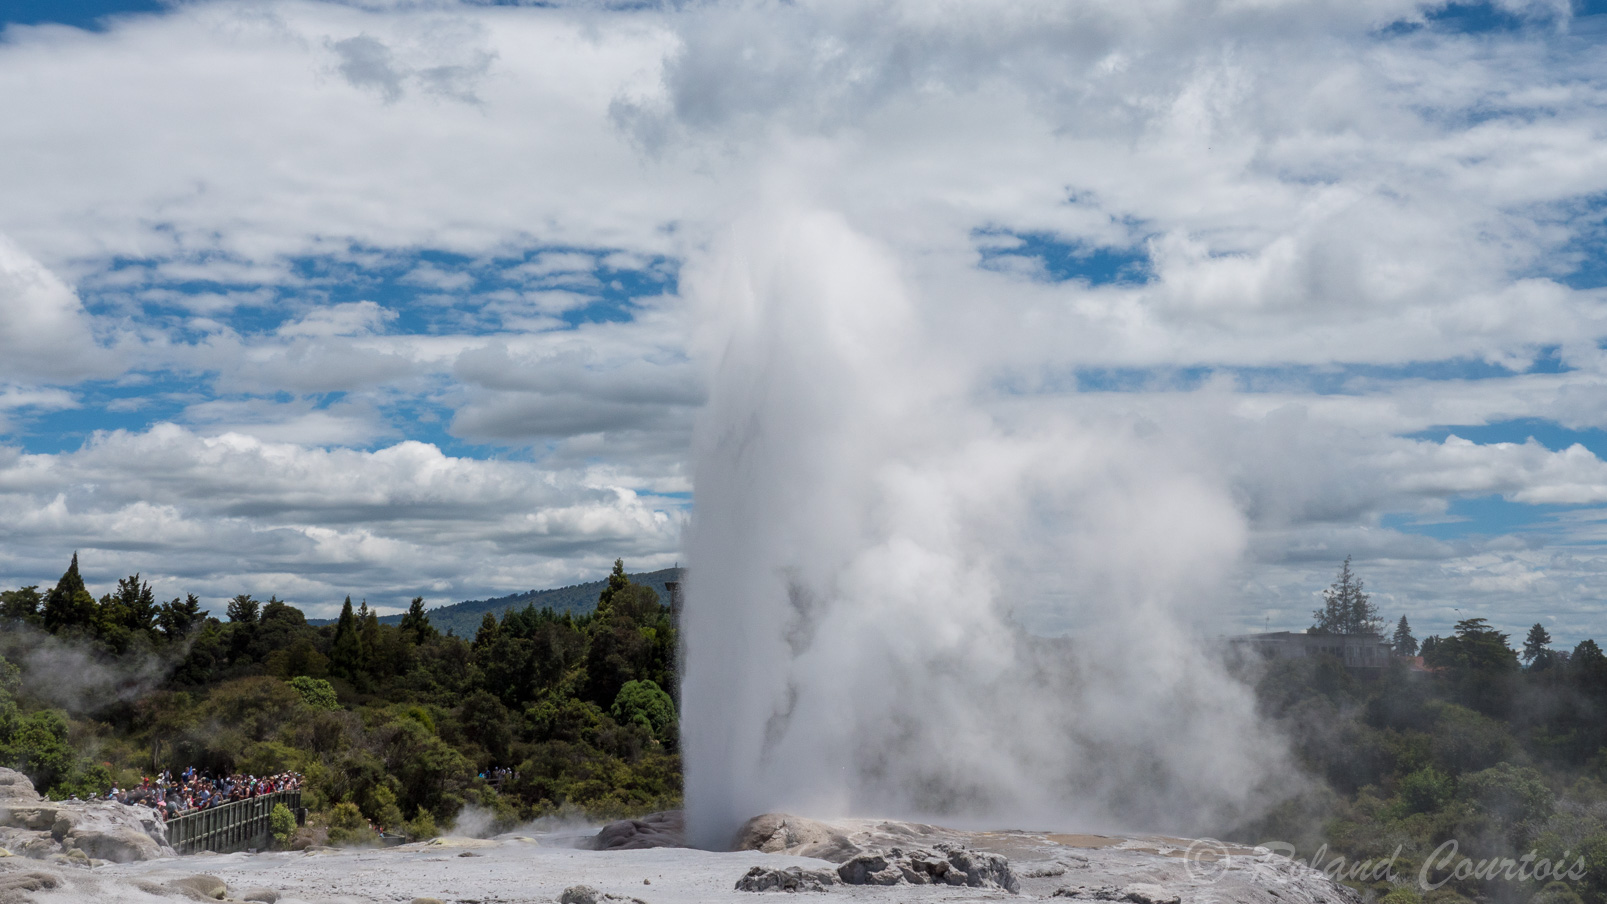 Le site de Te Puia. abrite le geyser de renommée internationale de Pohutu.